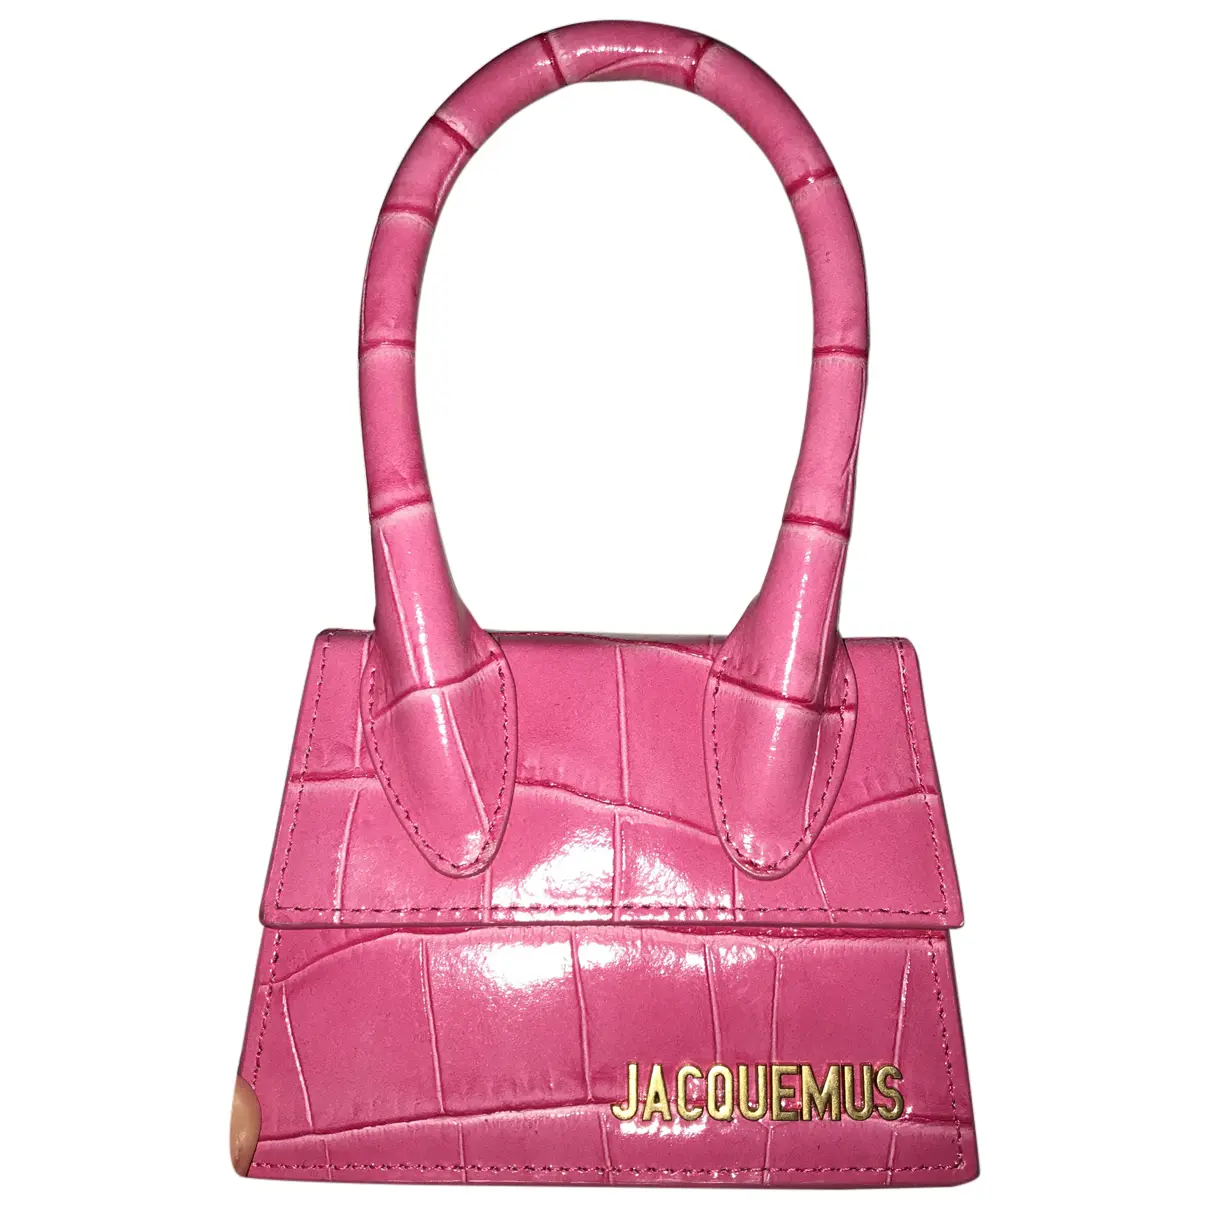 Chiquito leather crossbody bag Jacquemus